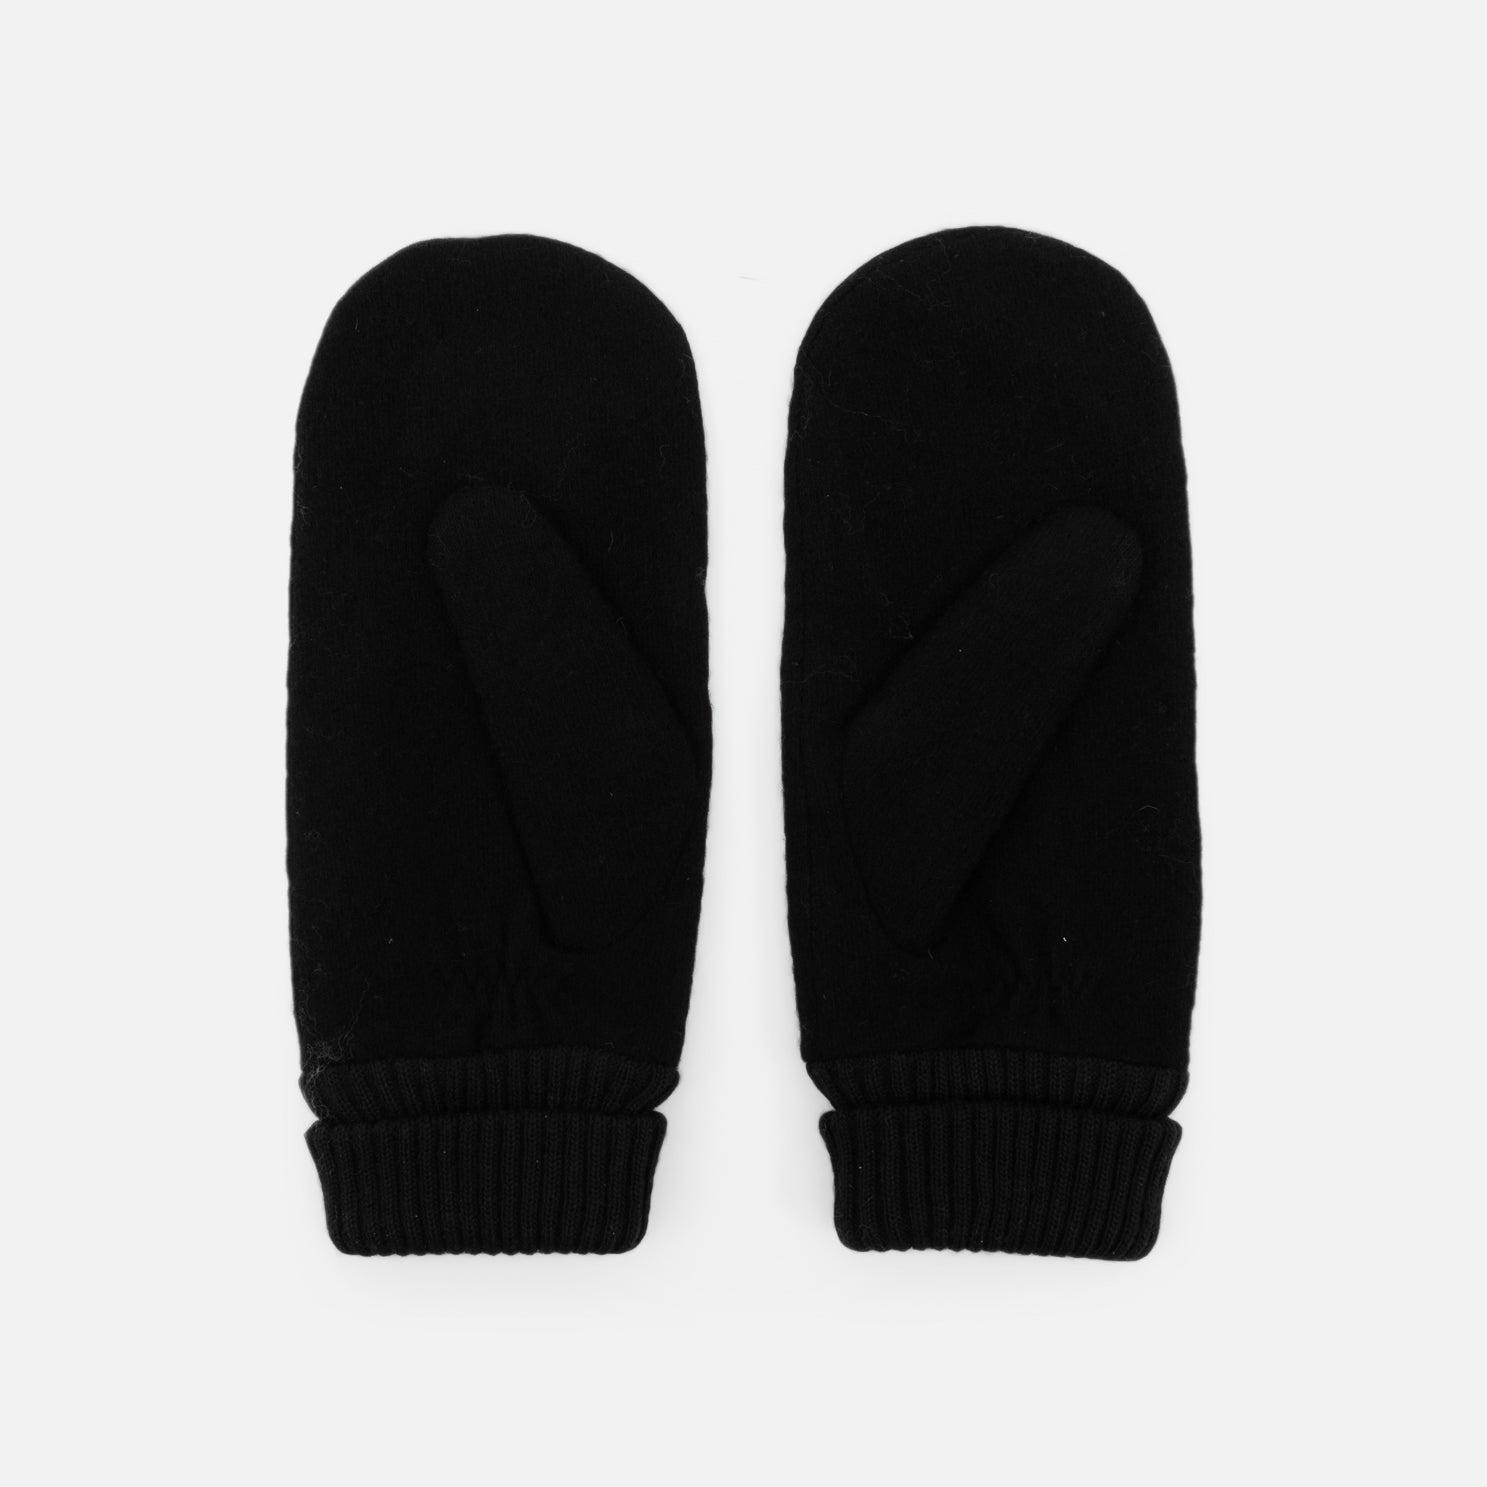 Black mittens with knit wrist